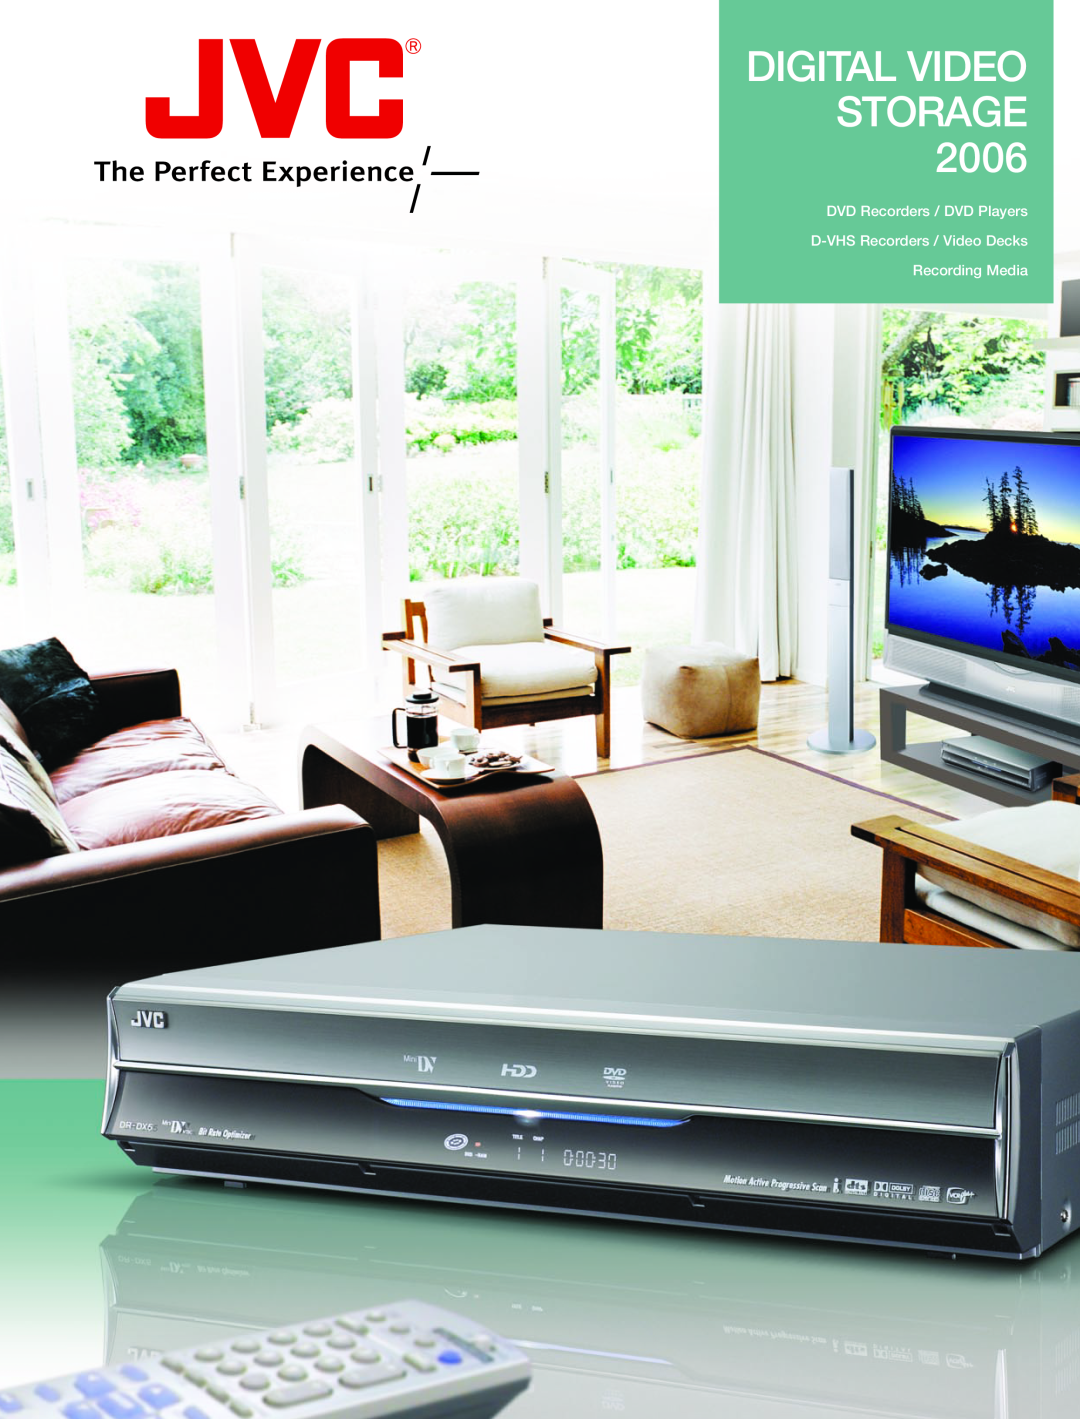 JVC 2006 manual Digital Video Storage, DVD Recorders / DVD Players D-VHS Recorders / Video Decks, Recording Media 